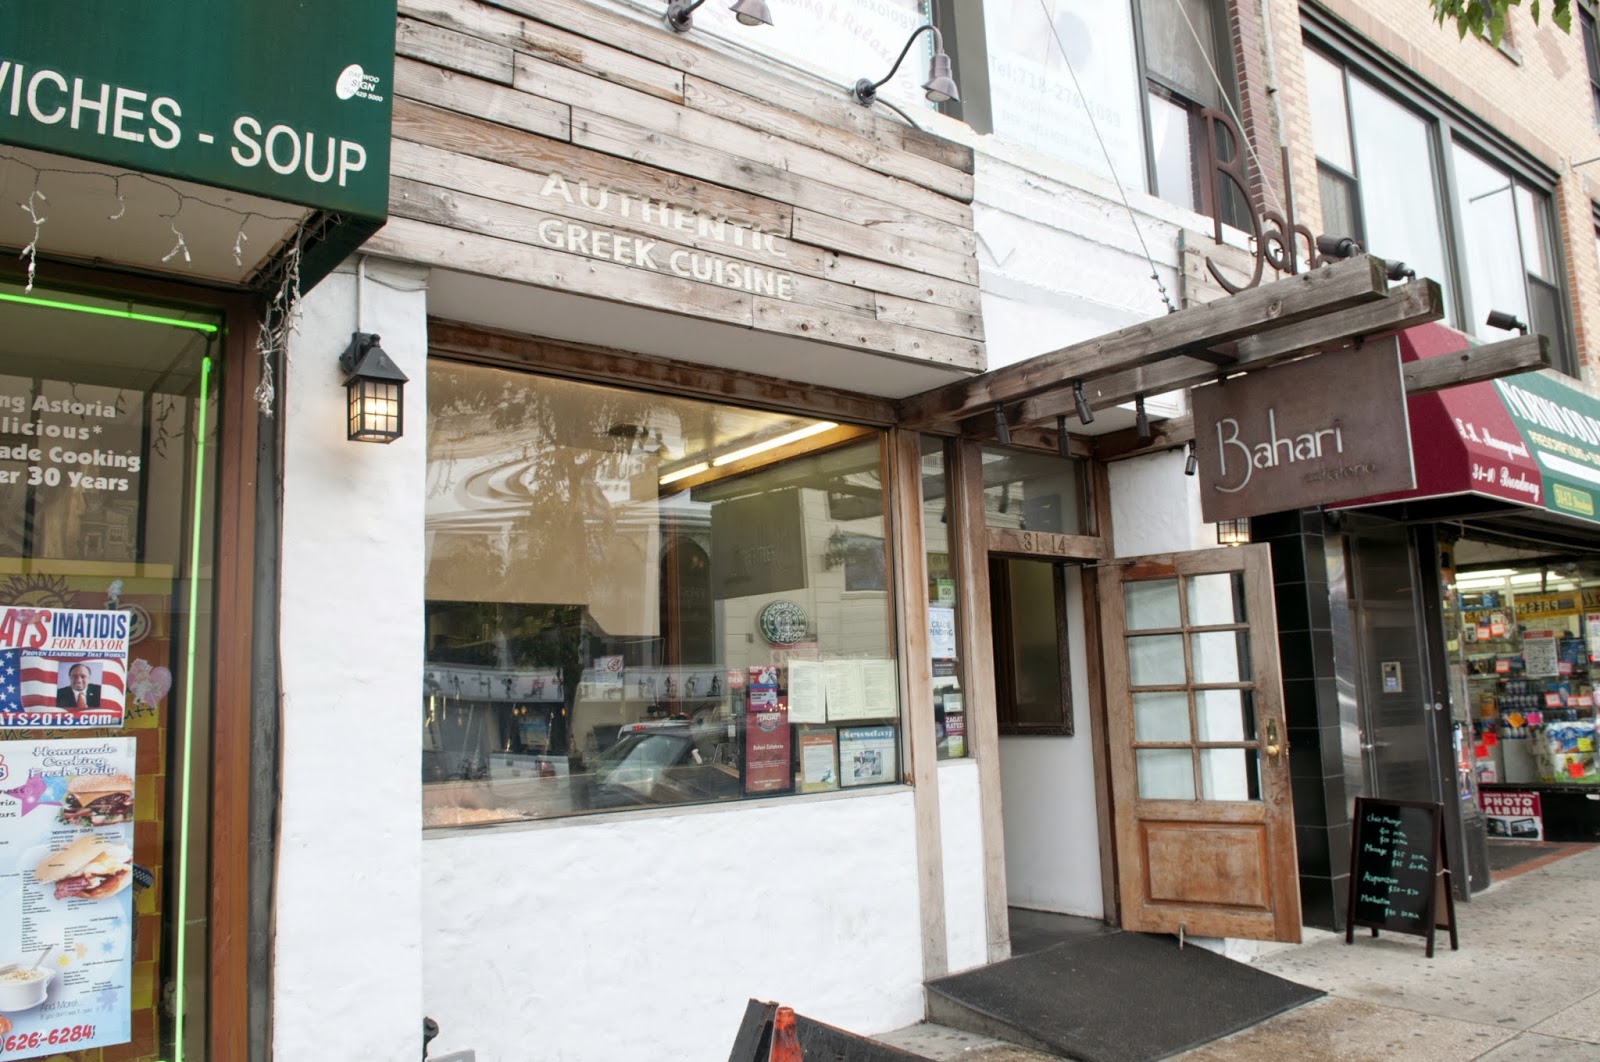 Photo of Bahari Estiatorio in Queens City, New York, United States - 2 Picture of Restaurant, Food, Point of interest, Establishment